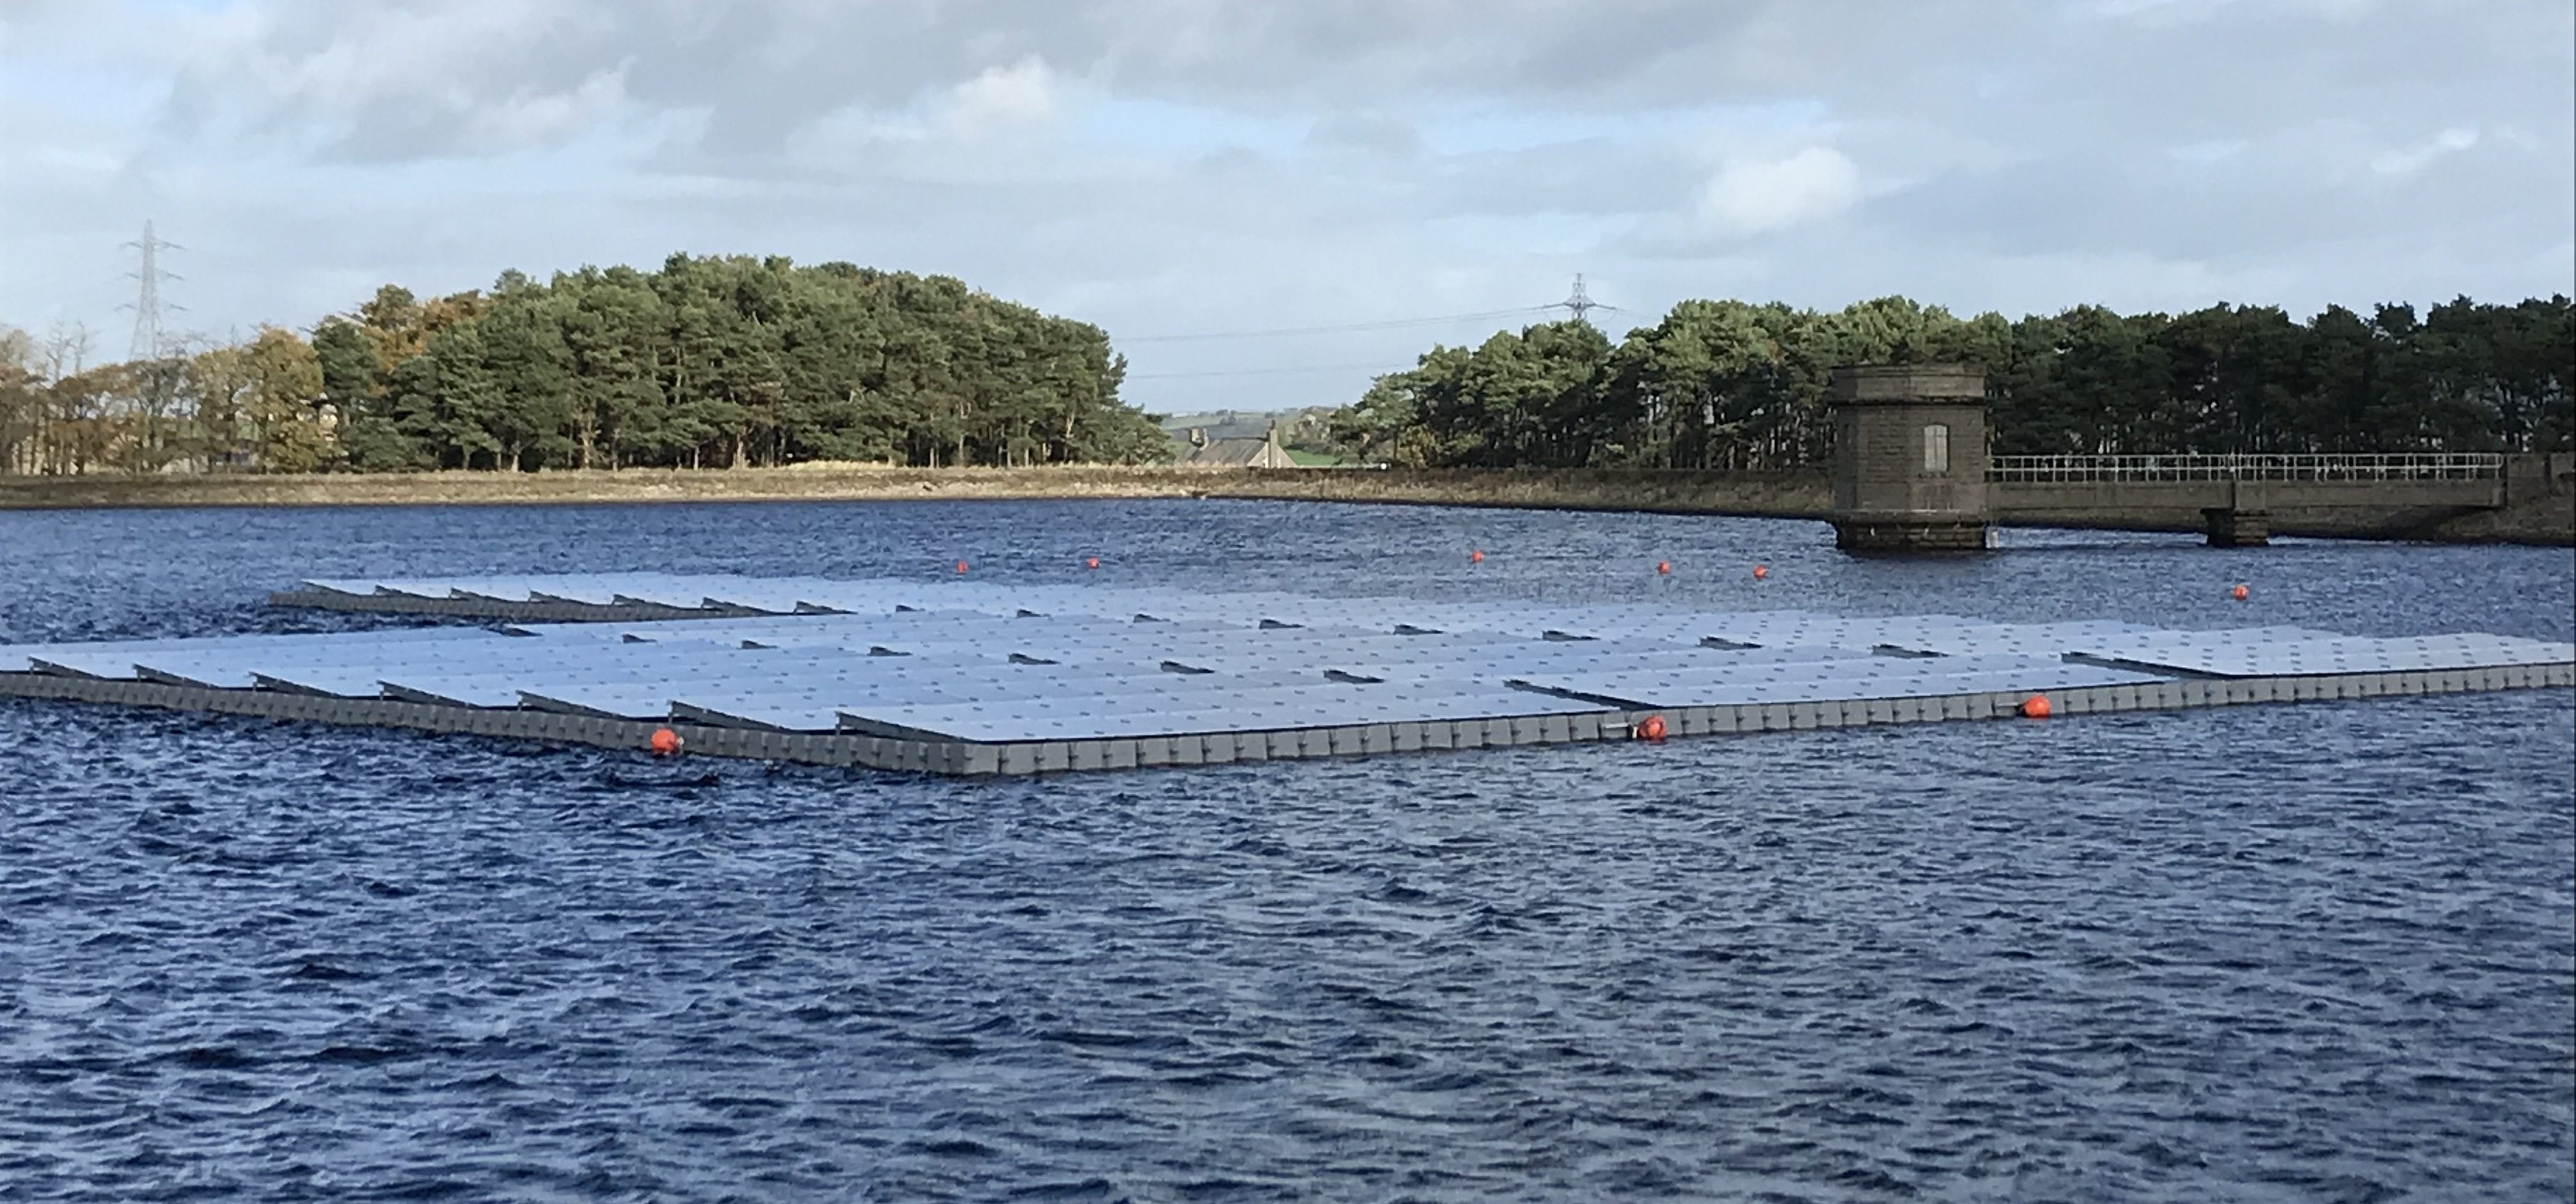 Floating solar farm under construction on Lancaster reservoir